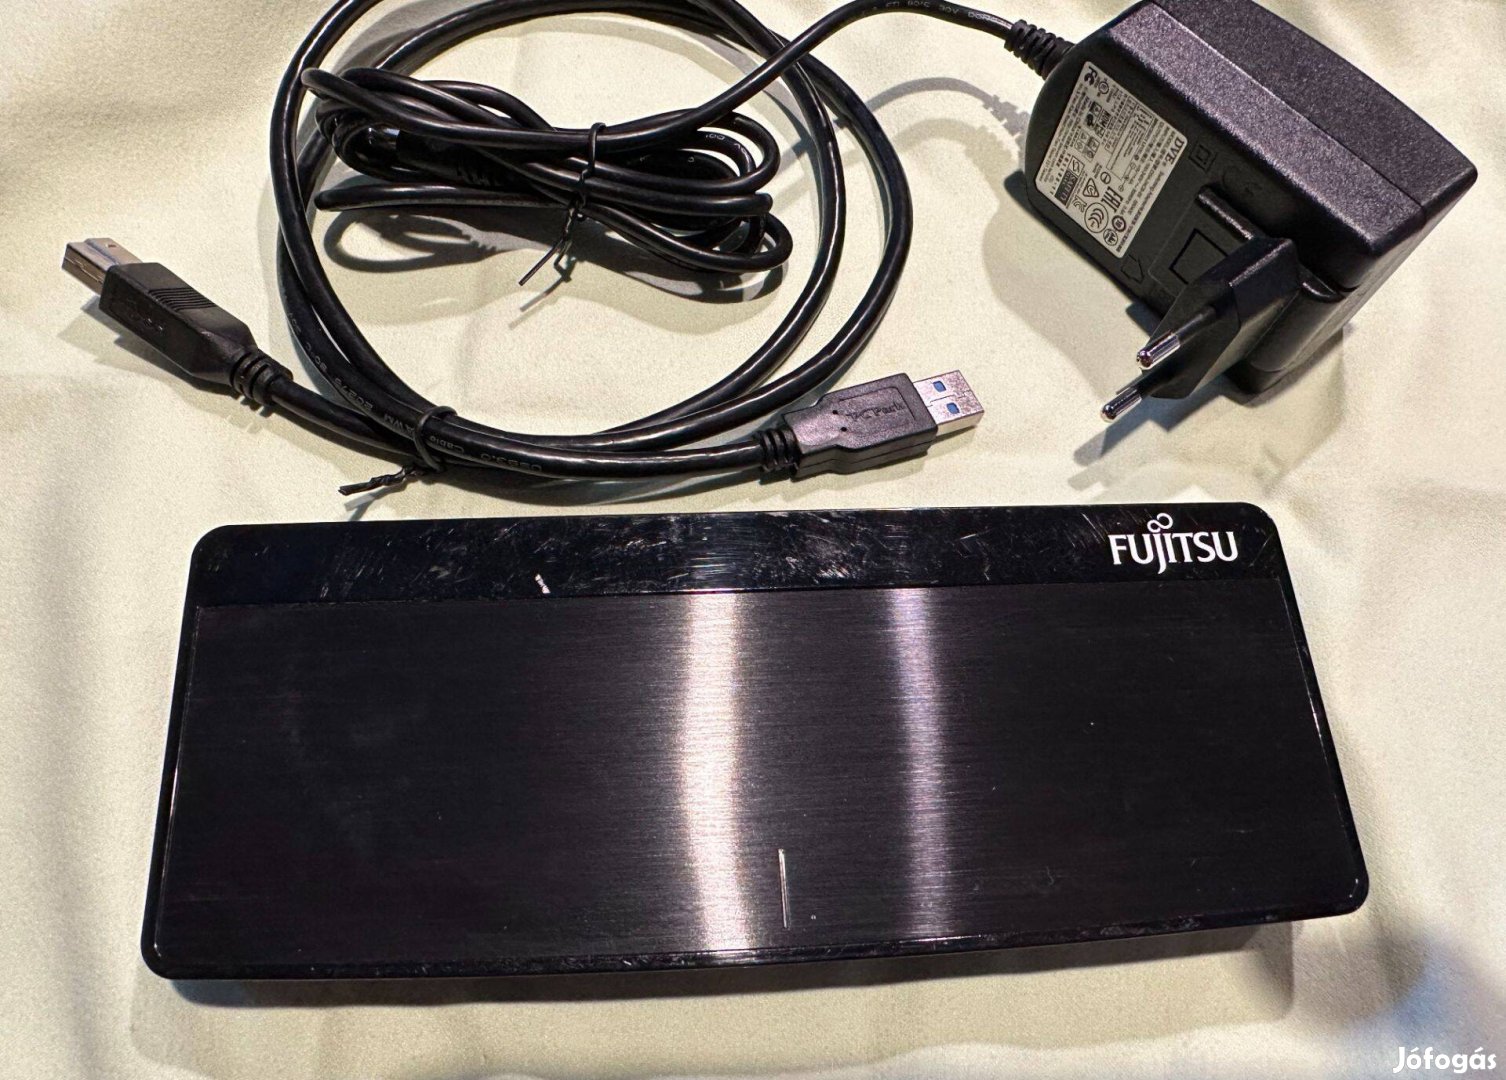 USB 3.0-as dokkoló, port replikátor (Fujitsu PR8.1) eladó